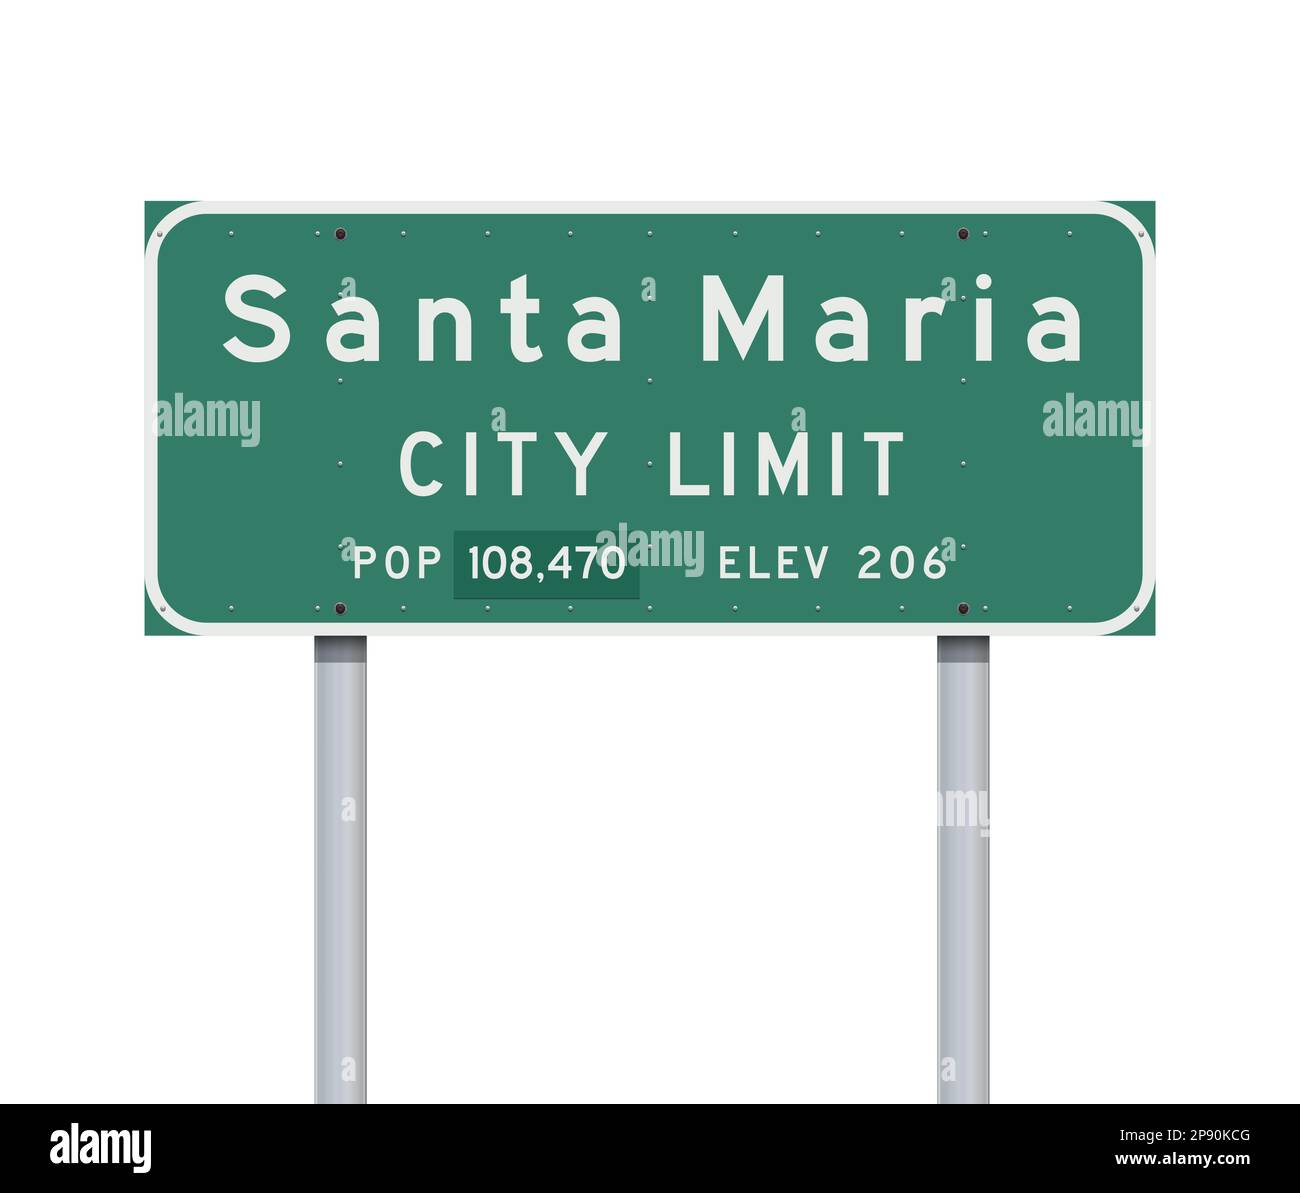 Vector illustration of the Santa Maria (California) City Limit green road sign on metallic posts Stock Vector